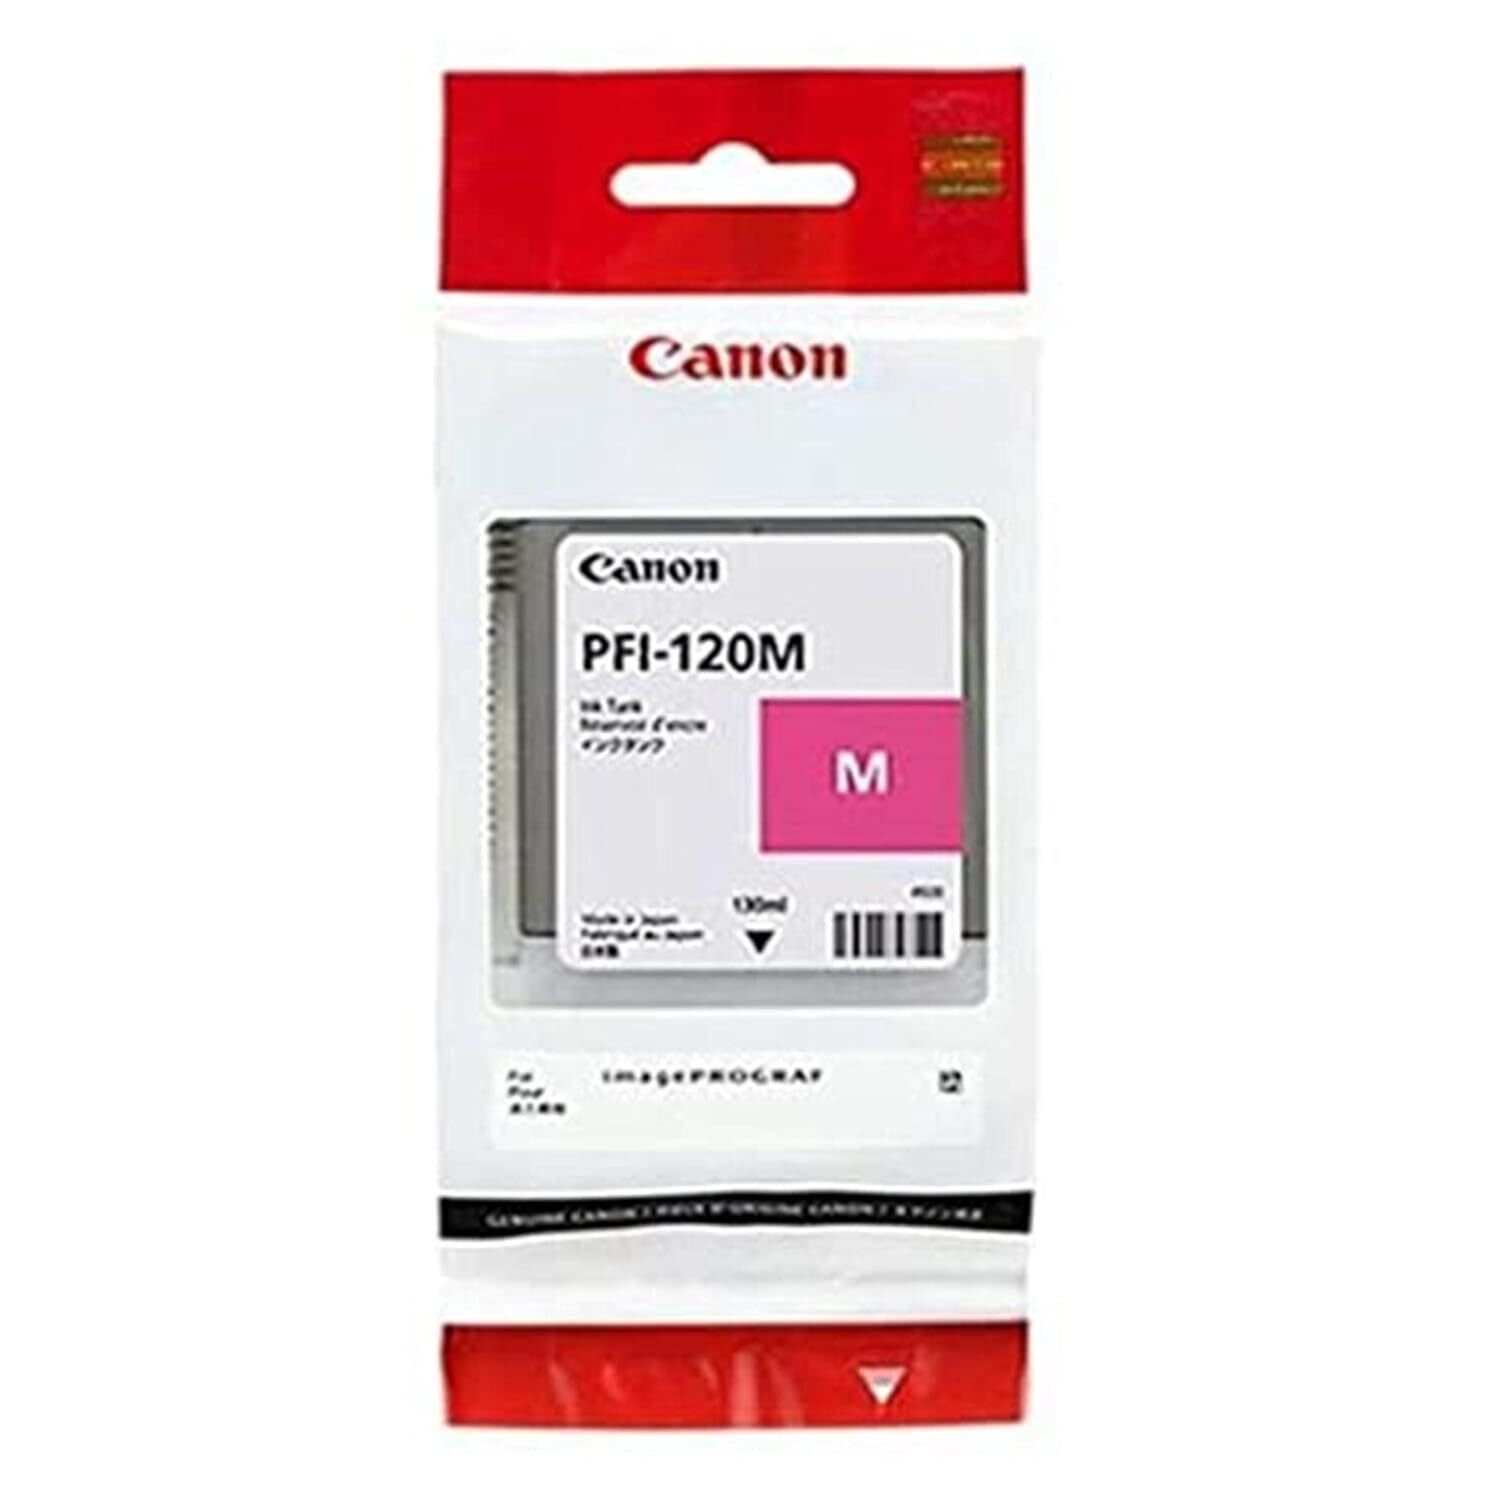 Canon PFI-120 130ml Pigment Ink Tank for imagePROGRAF TM Series Printers, Mage